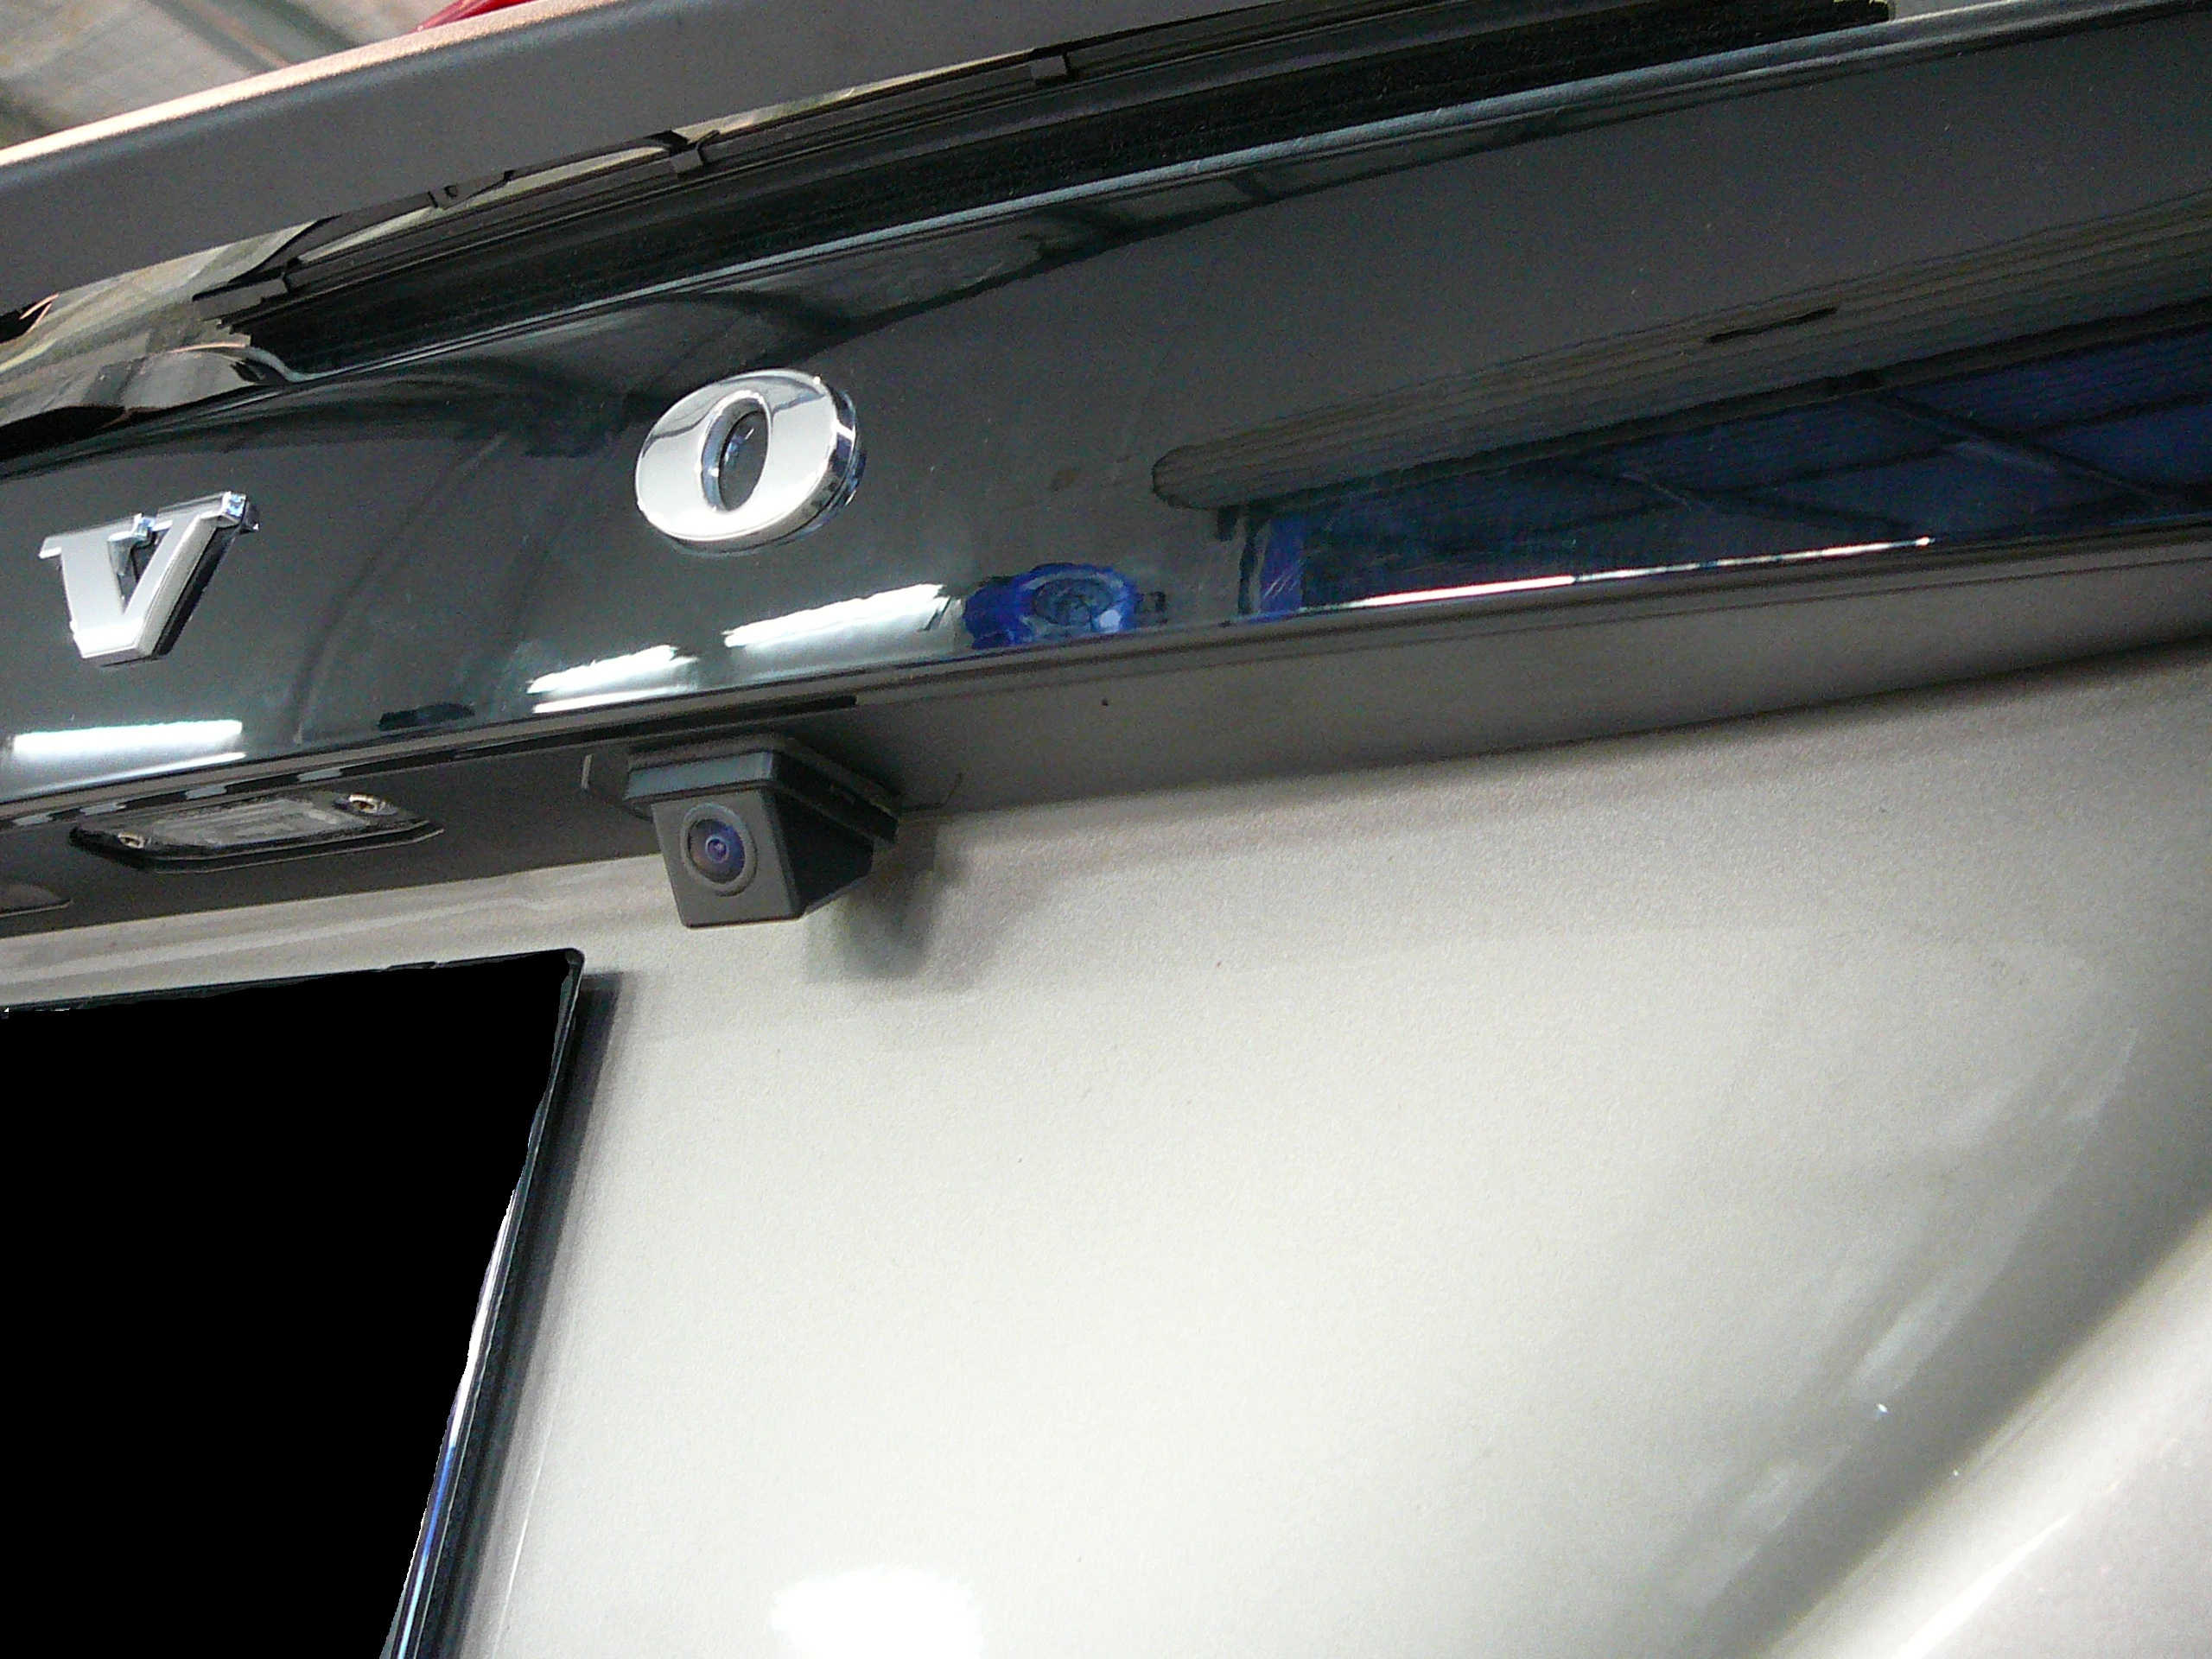 Volvo V60 2012, 4.3 inch monitor and reverse camera